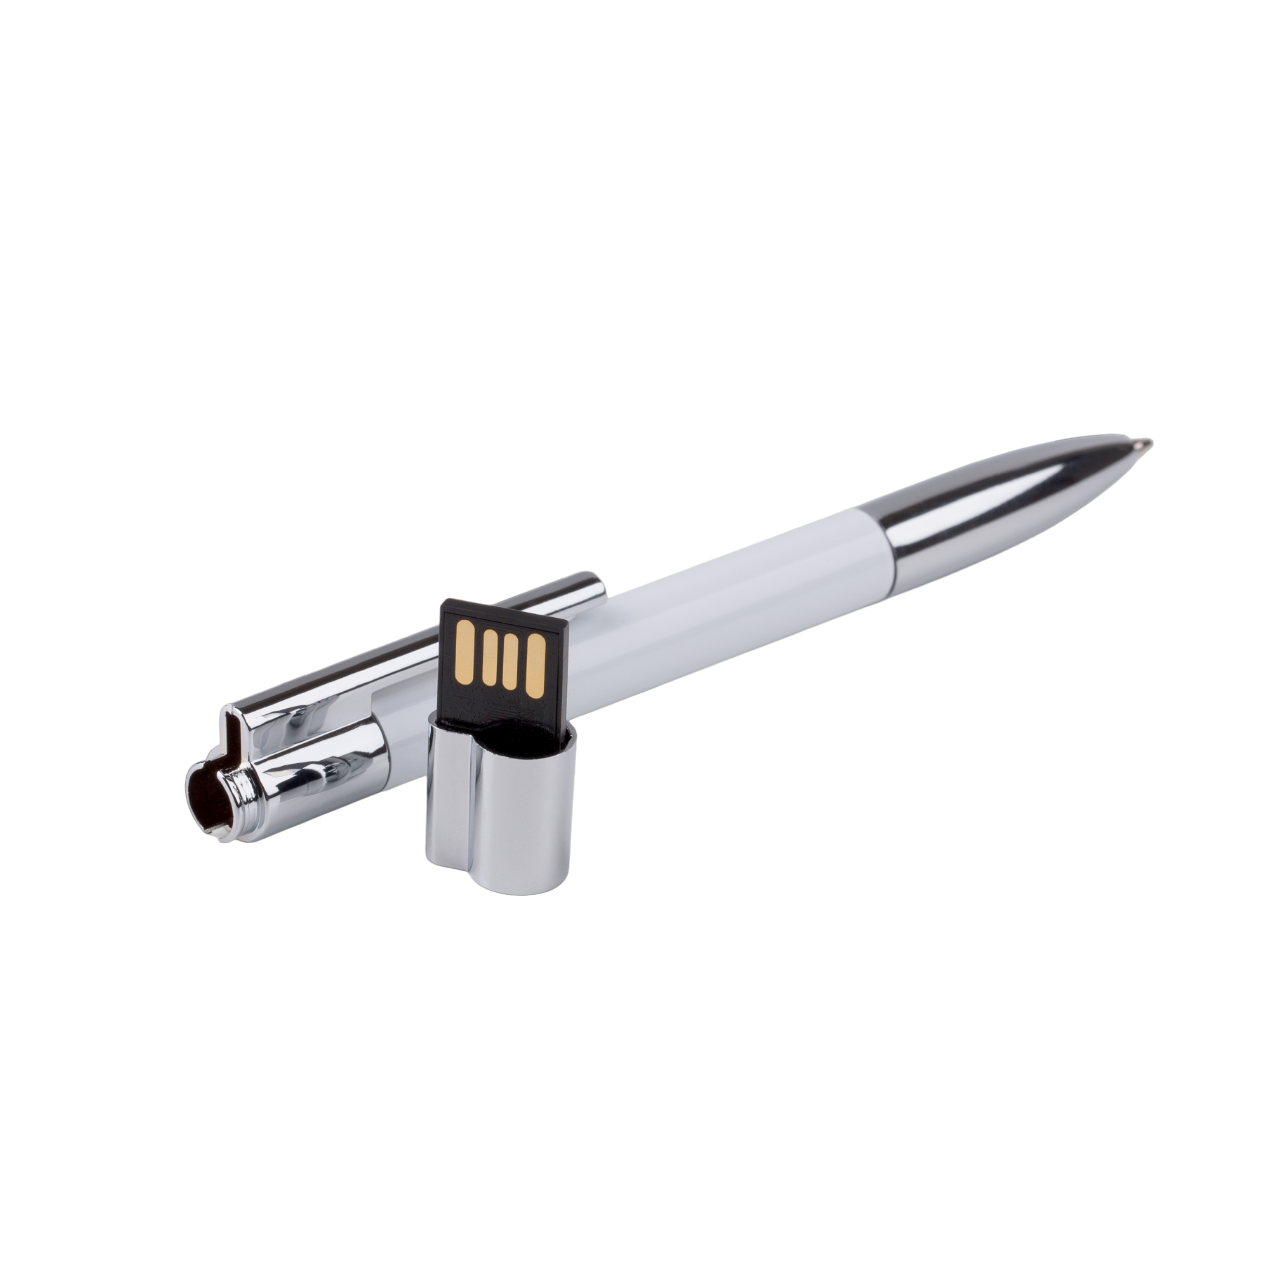 USB-флешка модель 595, объем памяти 2 GB, цвет W